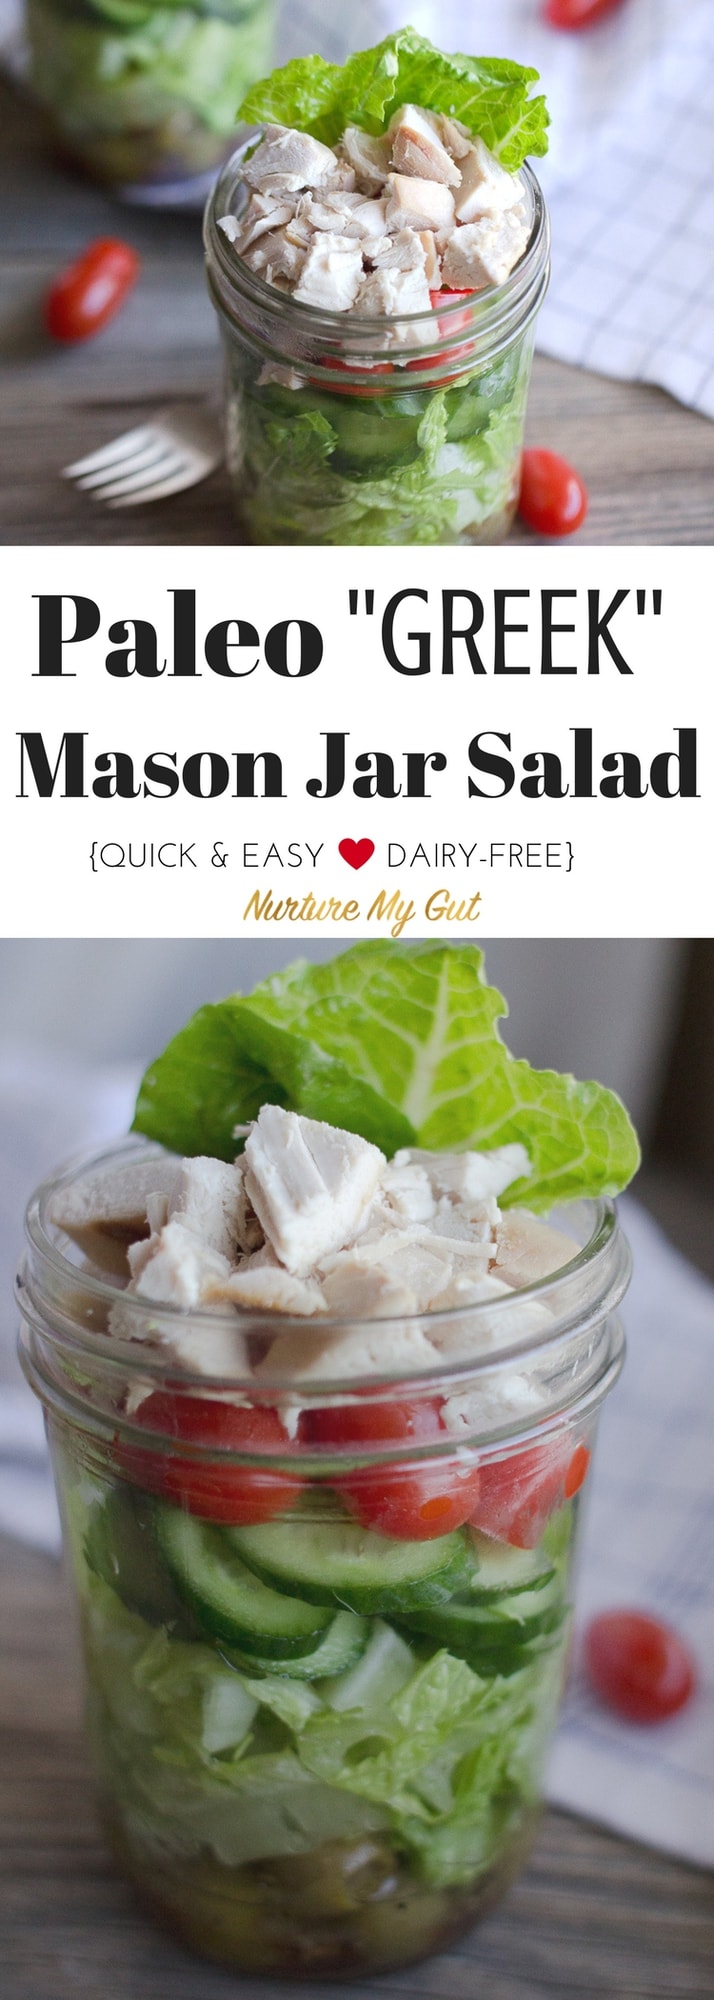 Paleo Greek Majon Jar Salad Recipe